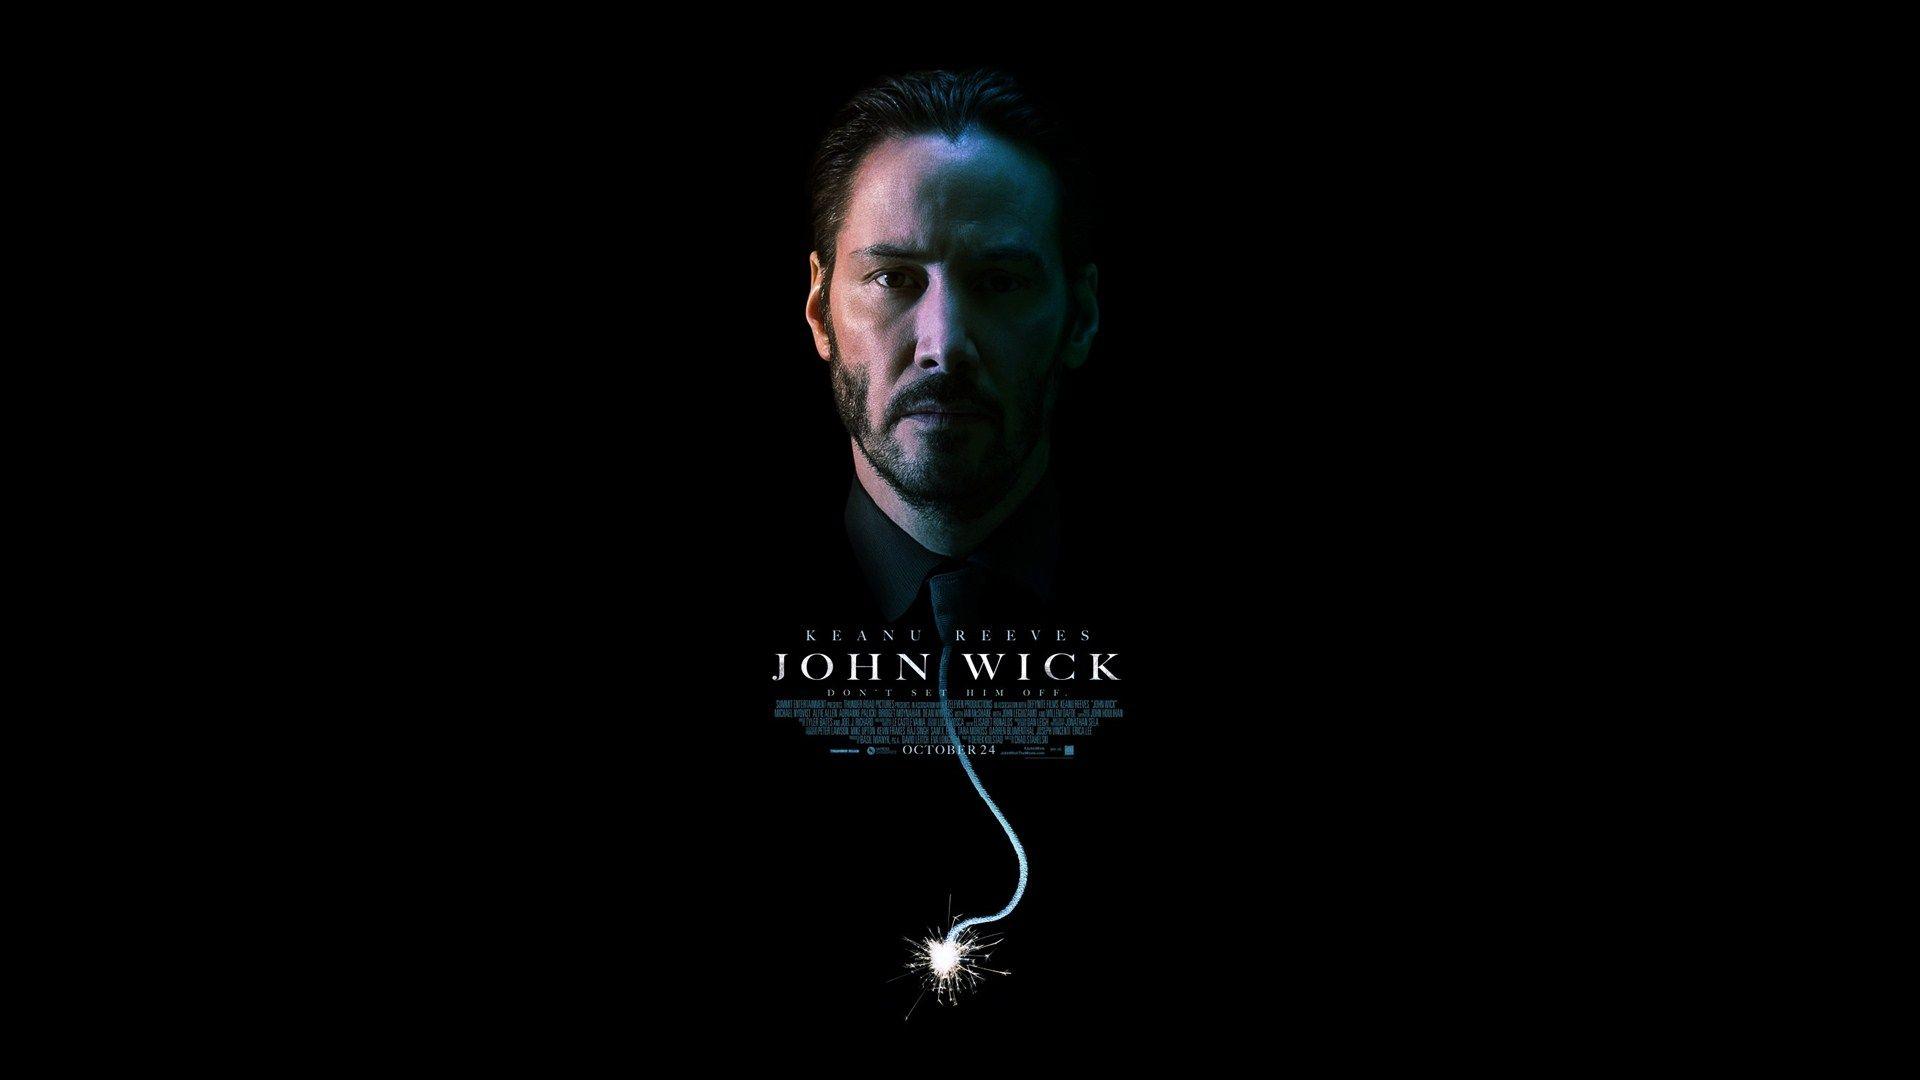 John Wick HD Wallpaper for desktop download